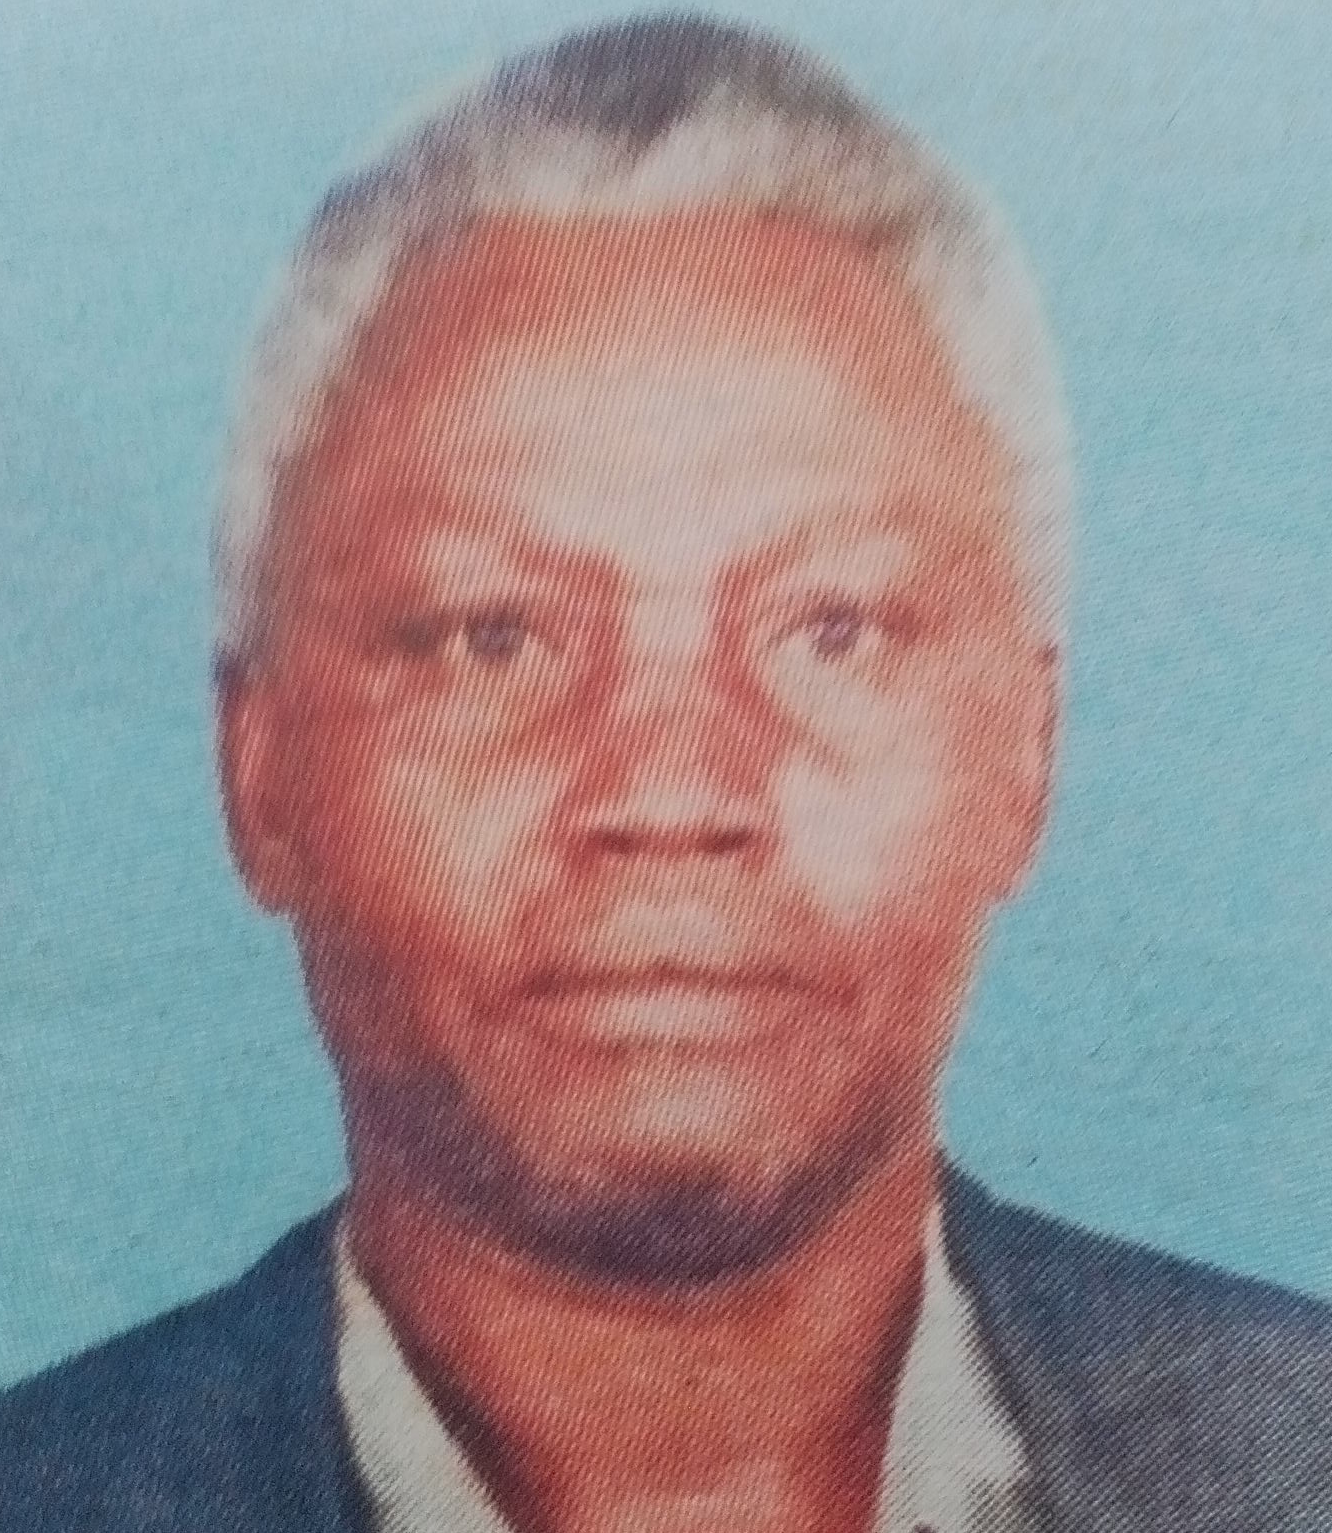 Obituary Image of James Mbuthia Kamau